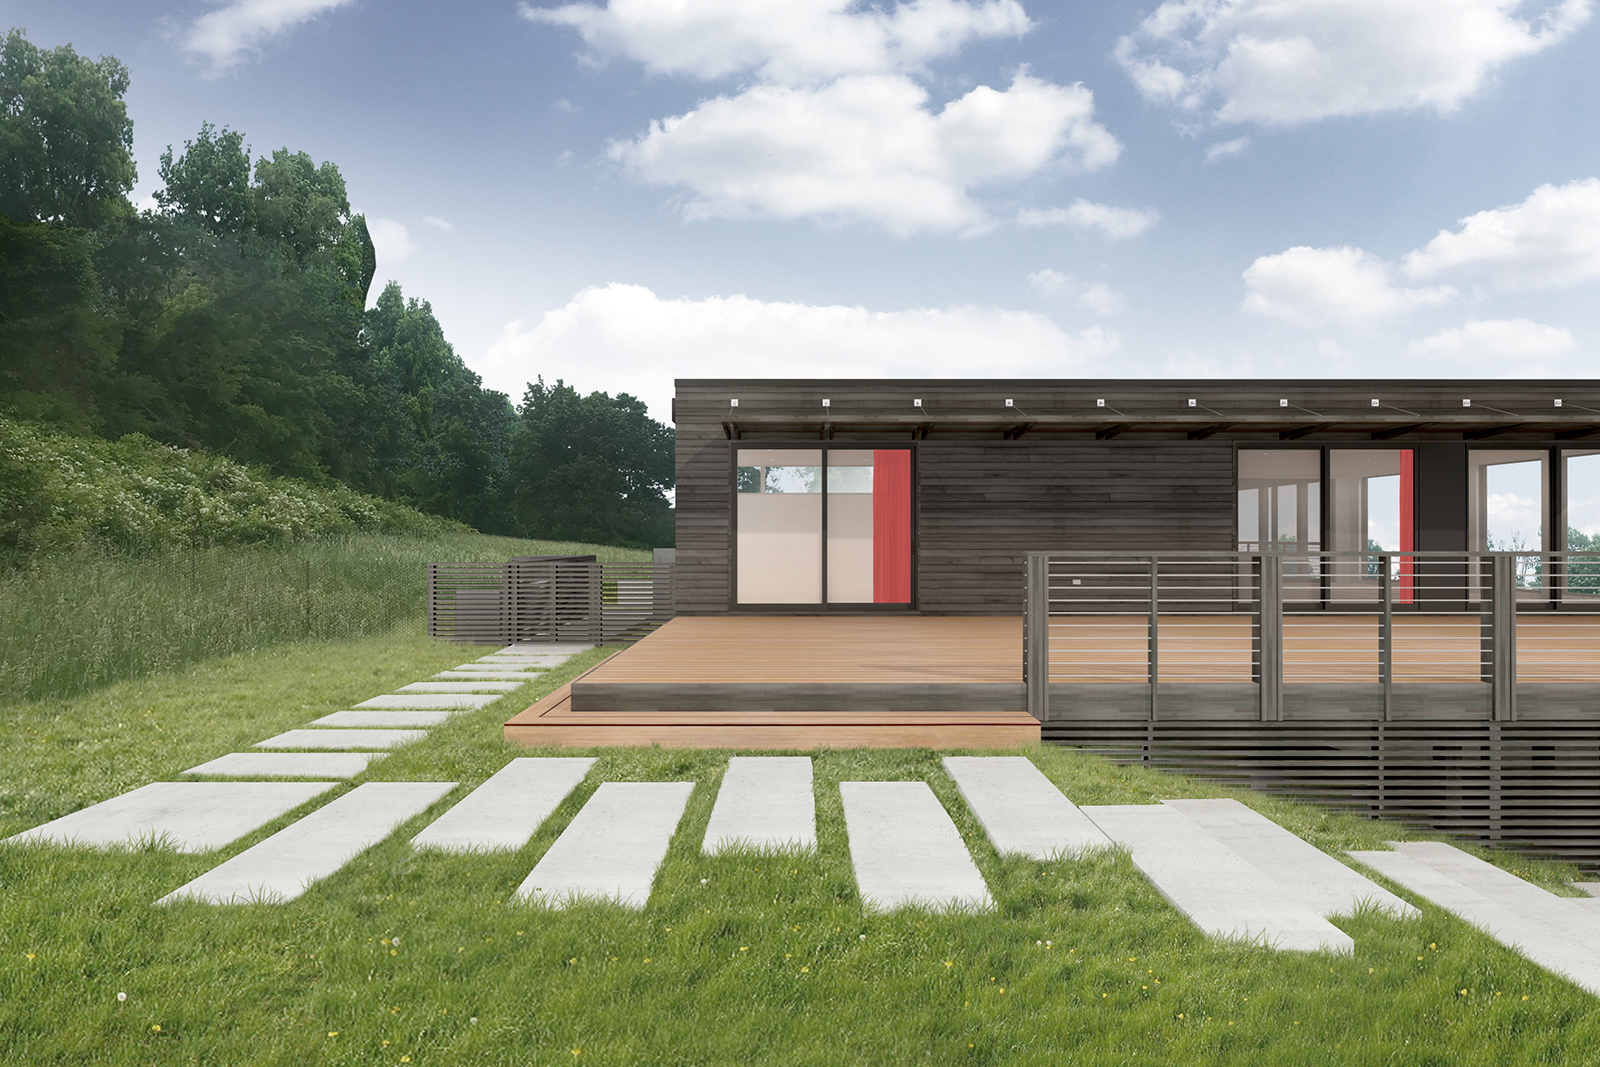 res4-resolution-4-architecture-modern-modular-prefab-sharon-ridge-residence-rendering-exterior-perspective-deck.jpg